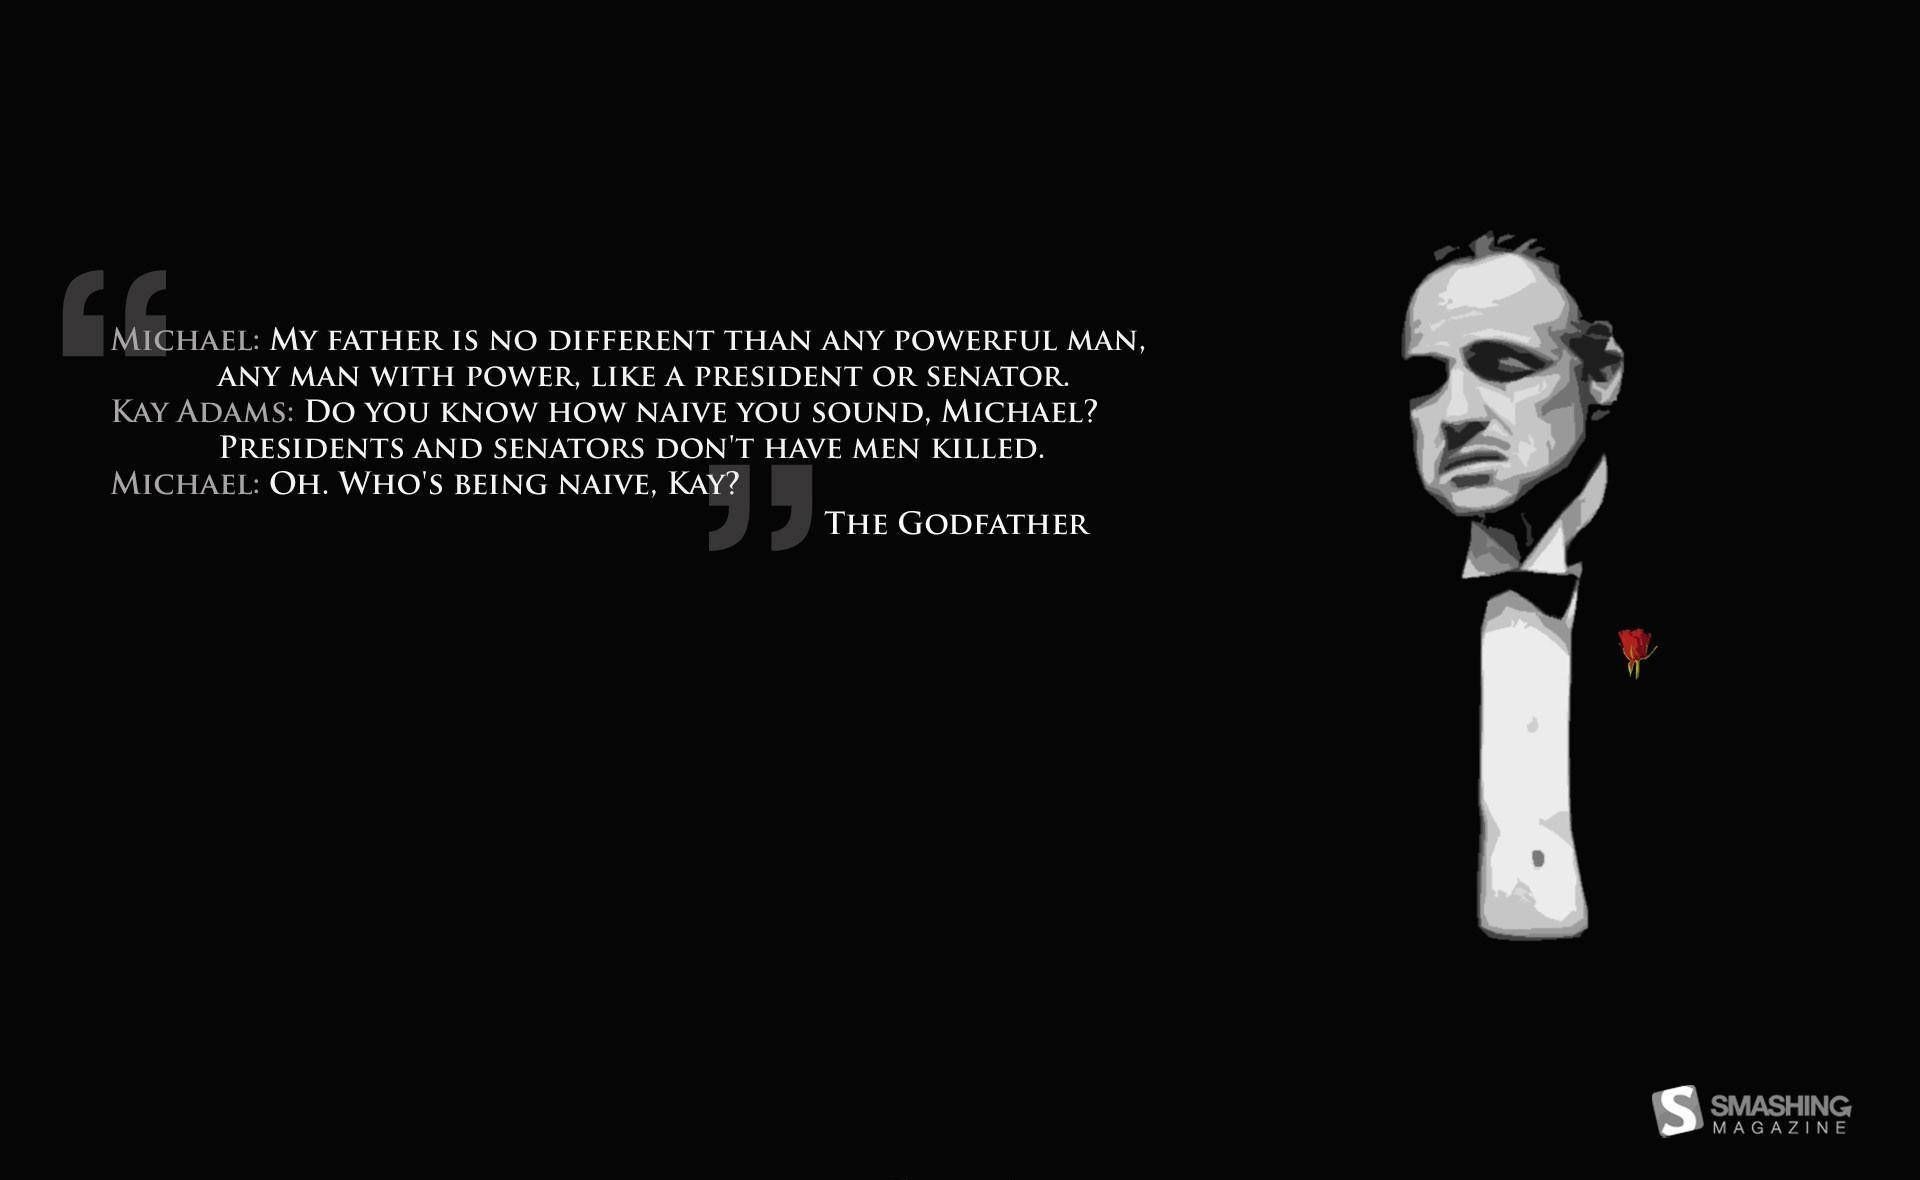 The Godfather Hintergrundbild 1920x1180. Free Godfather Wallpaper Downloads, Godfather Wallpaper for FREE